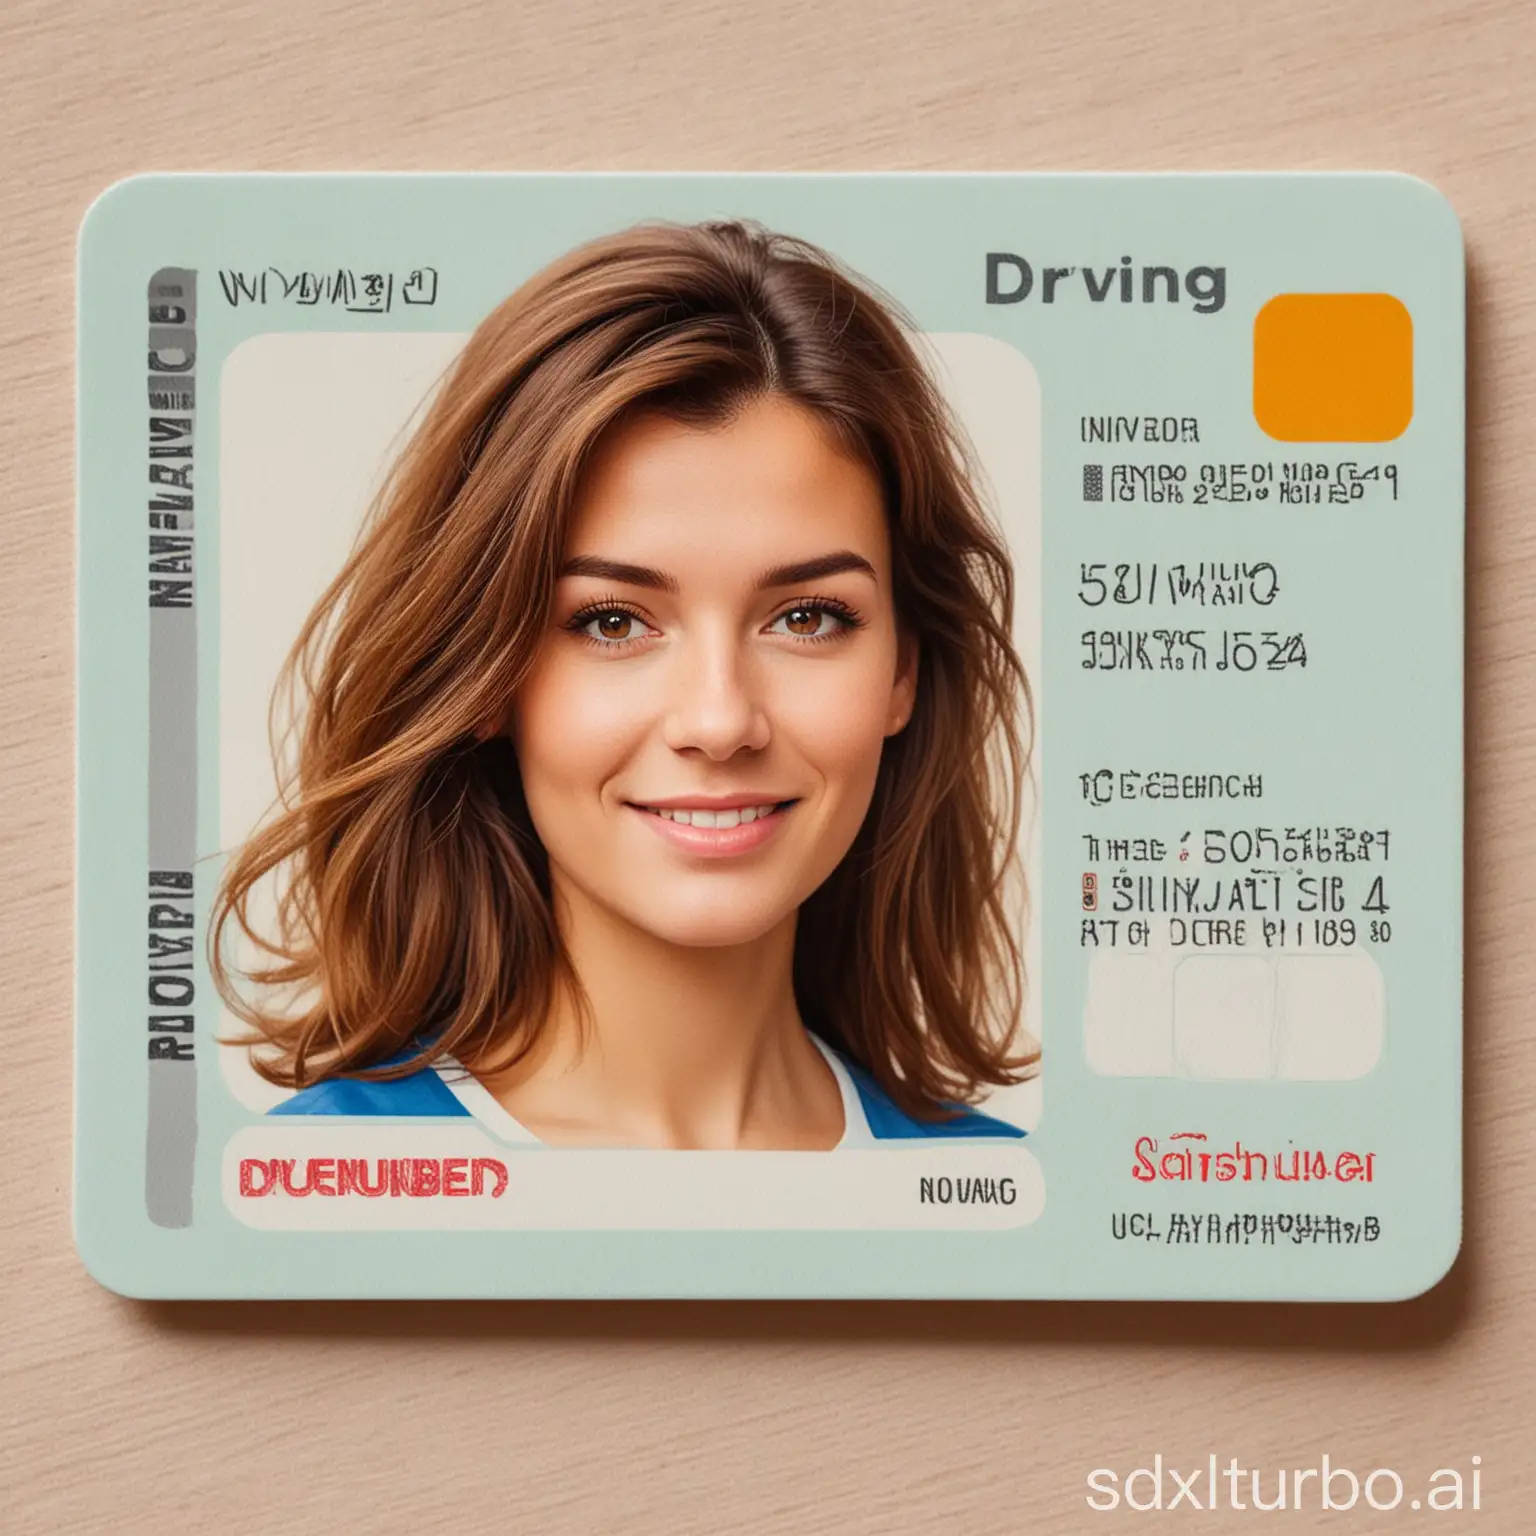 Cute-Dutch-Woman-Holding-Driving-License